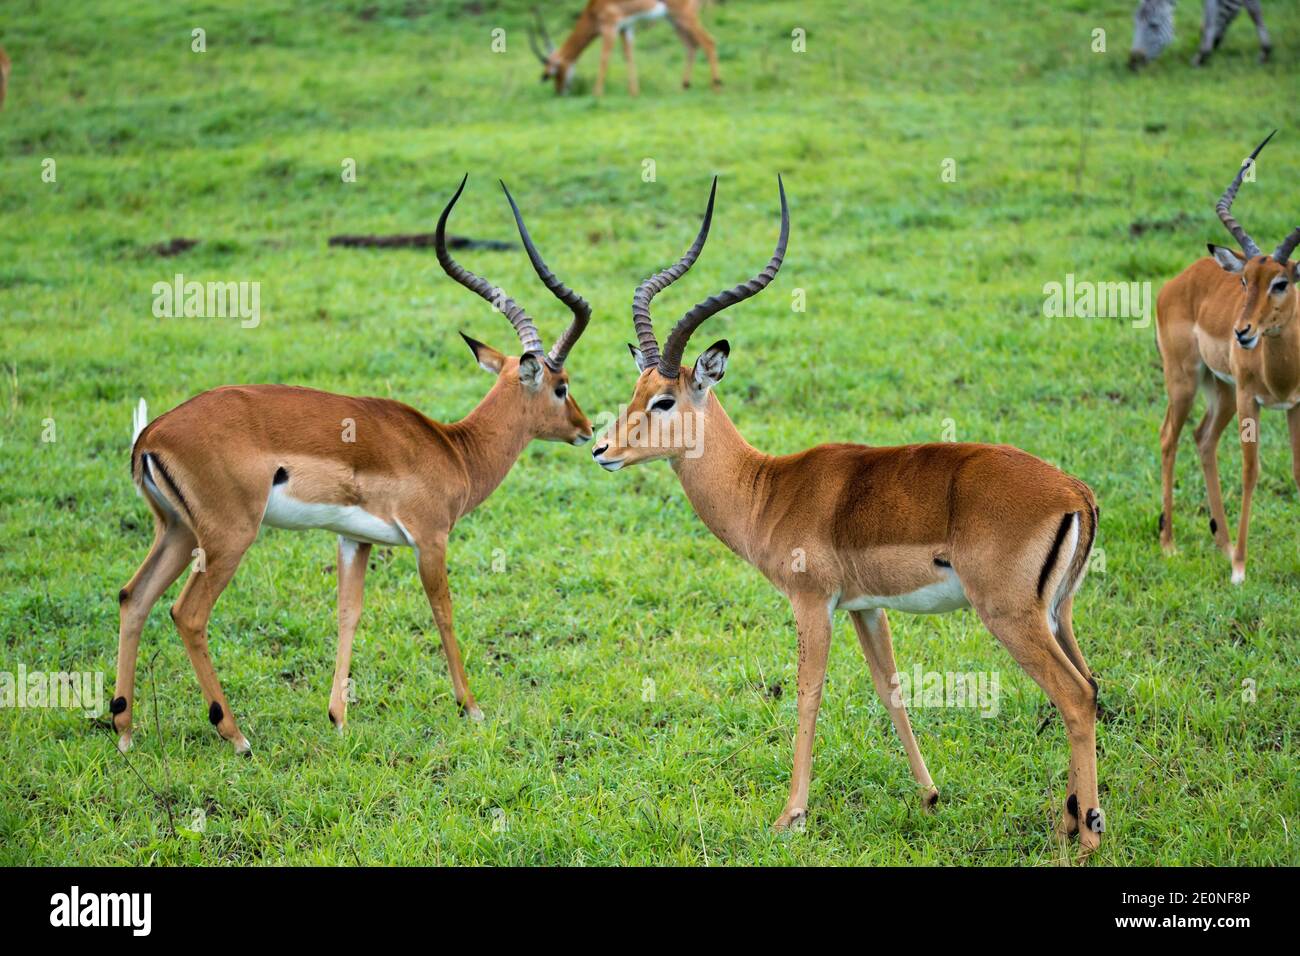 An Impala family on a grass landscape in the Kenyan savannah. Stock Photo